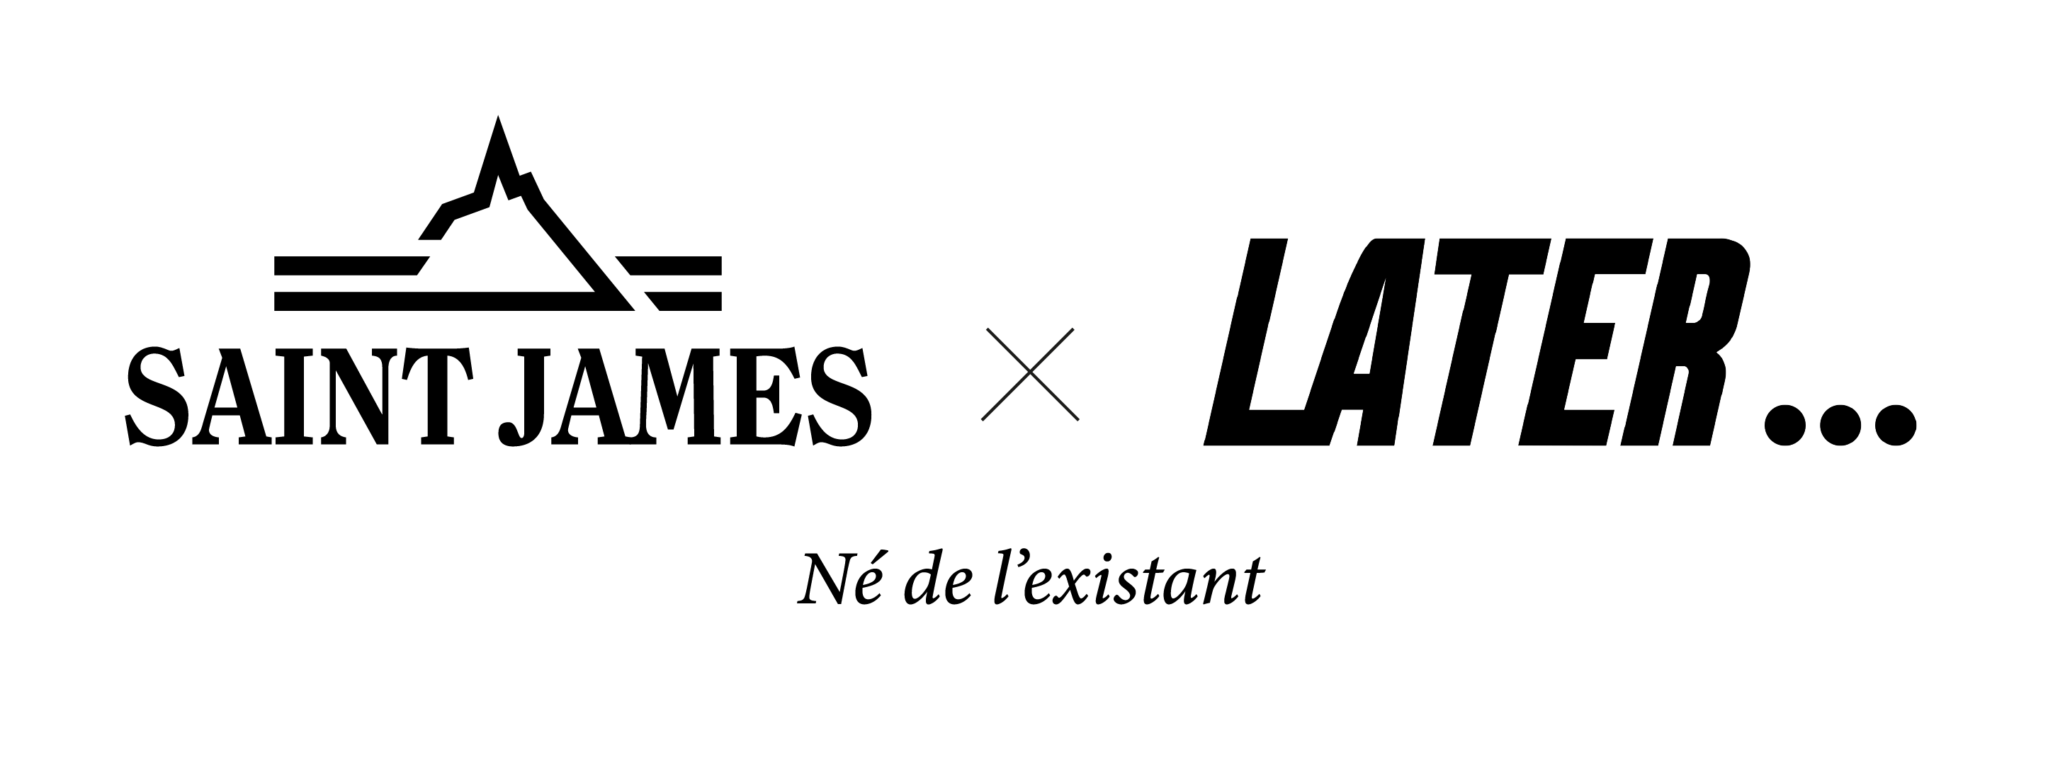 SAINT JAMES x LATER logo noir 